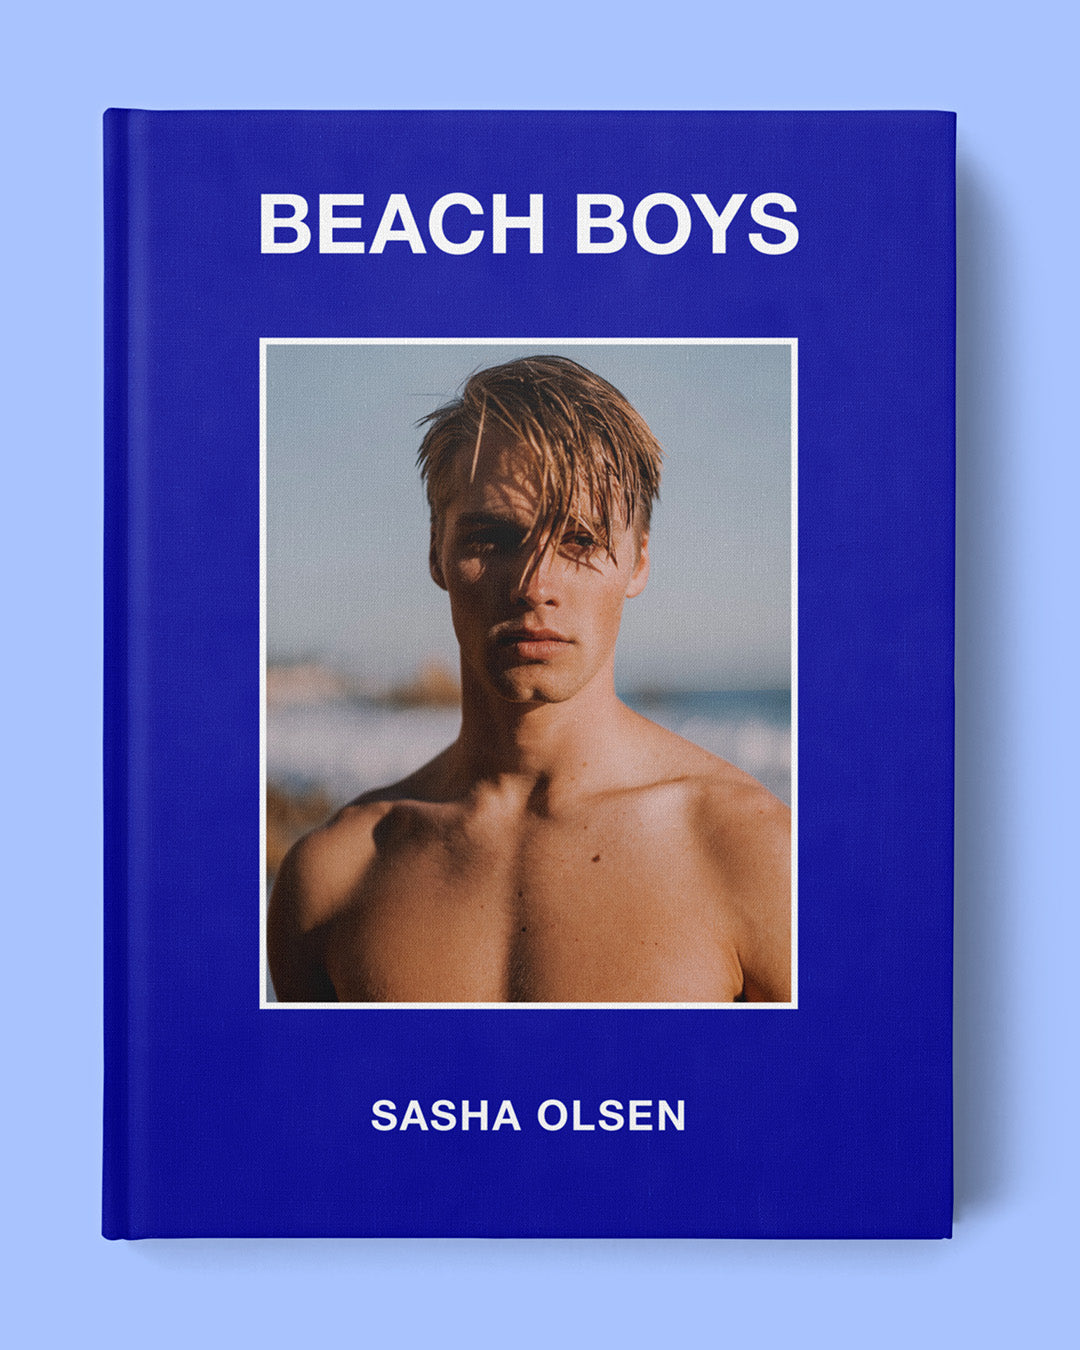 BEACH BOYS BY SASHA OLSEN (8149598961914)